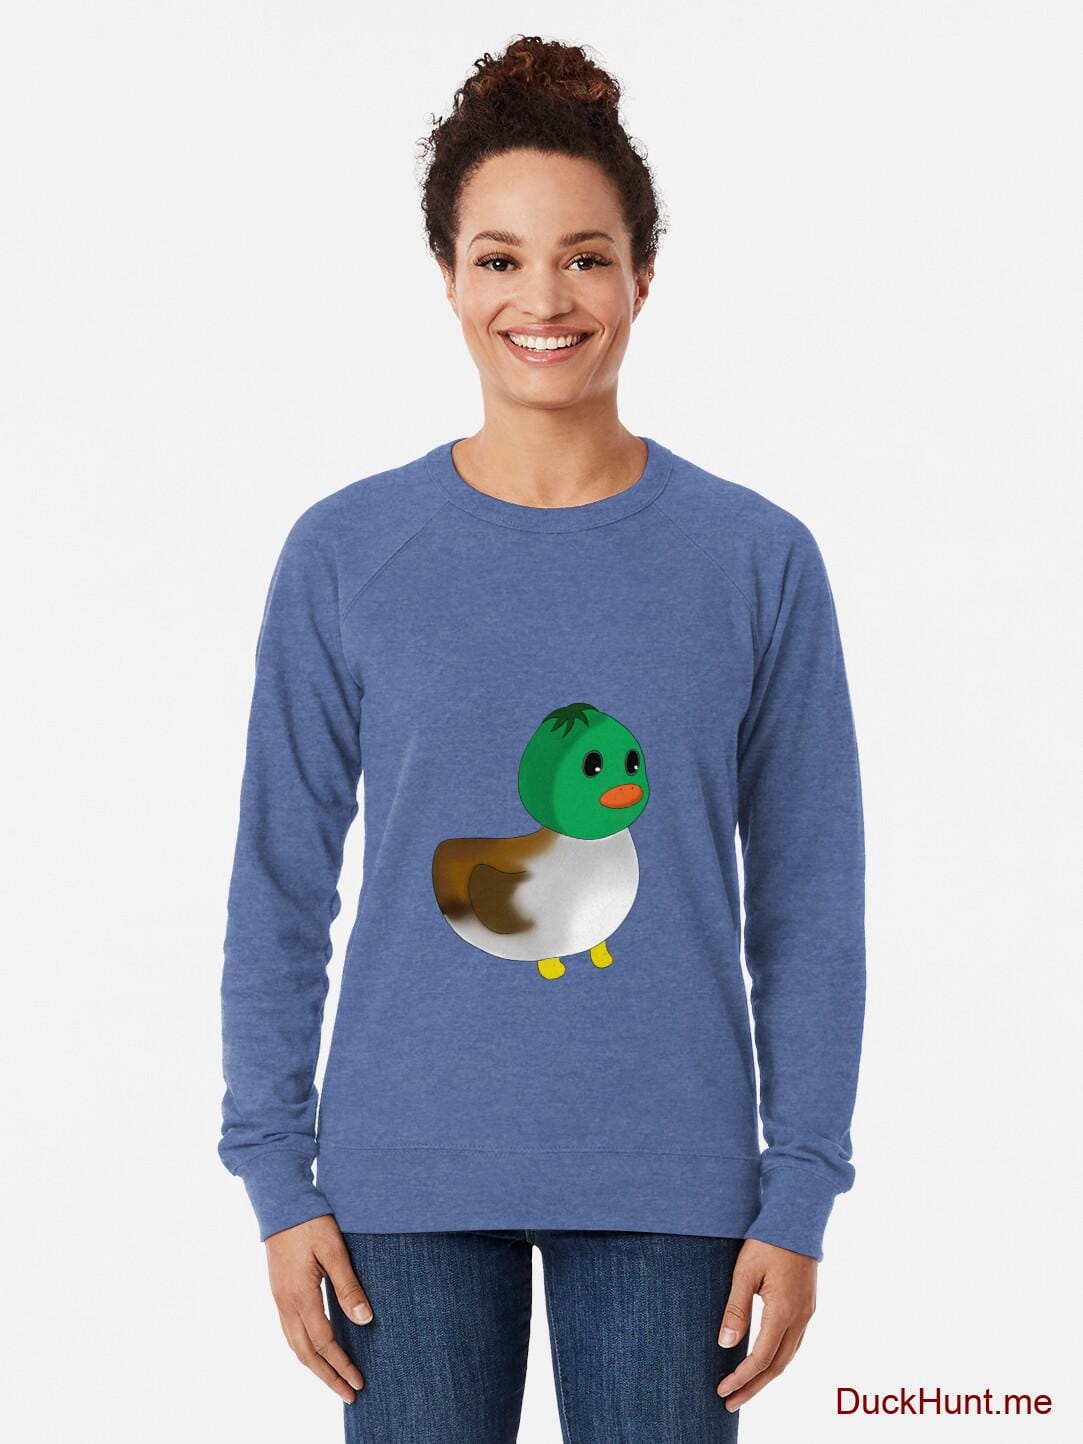 Normal Duck Royal Lightweight Sweatshirt alternative image 1